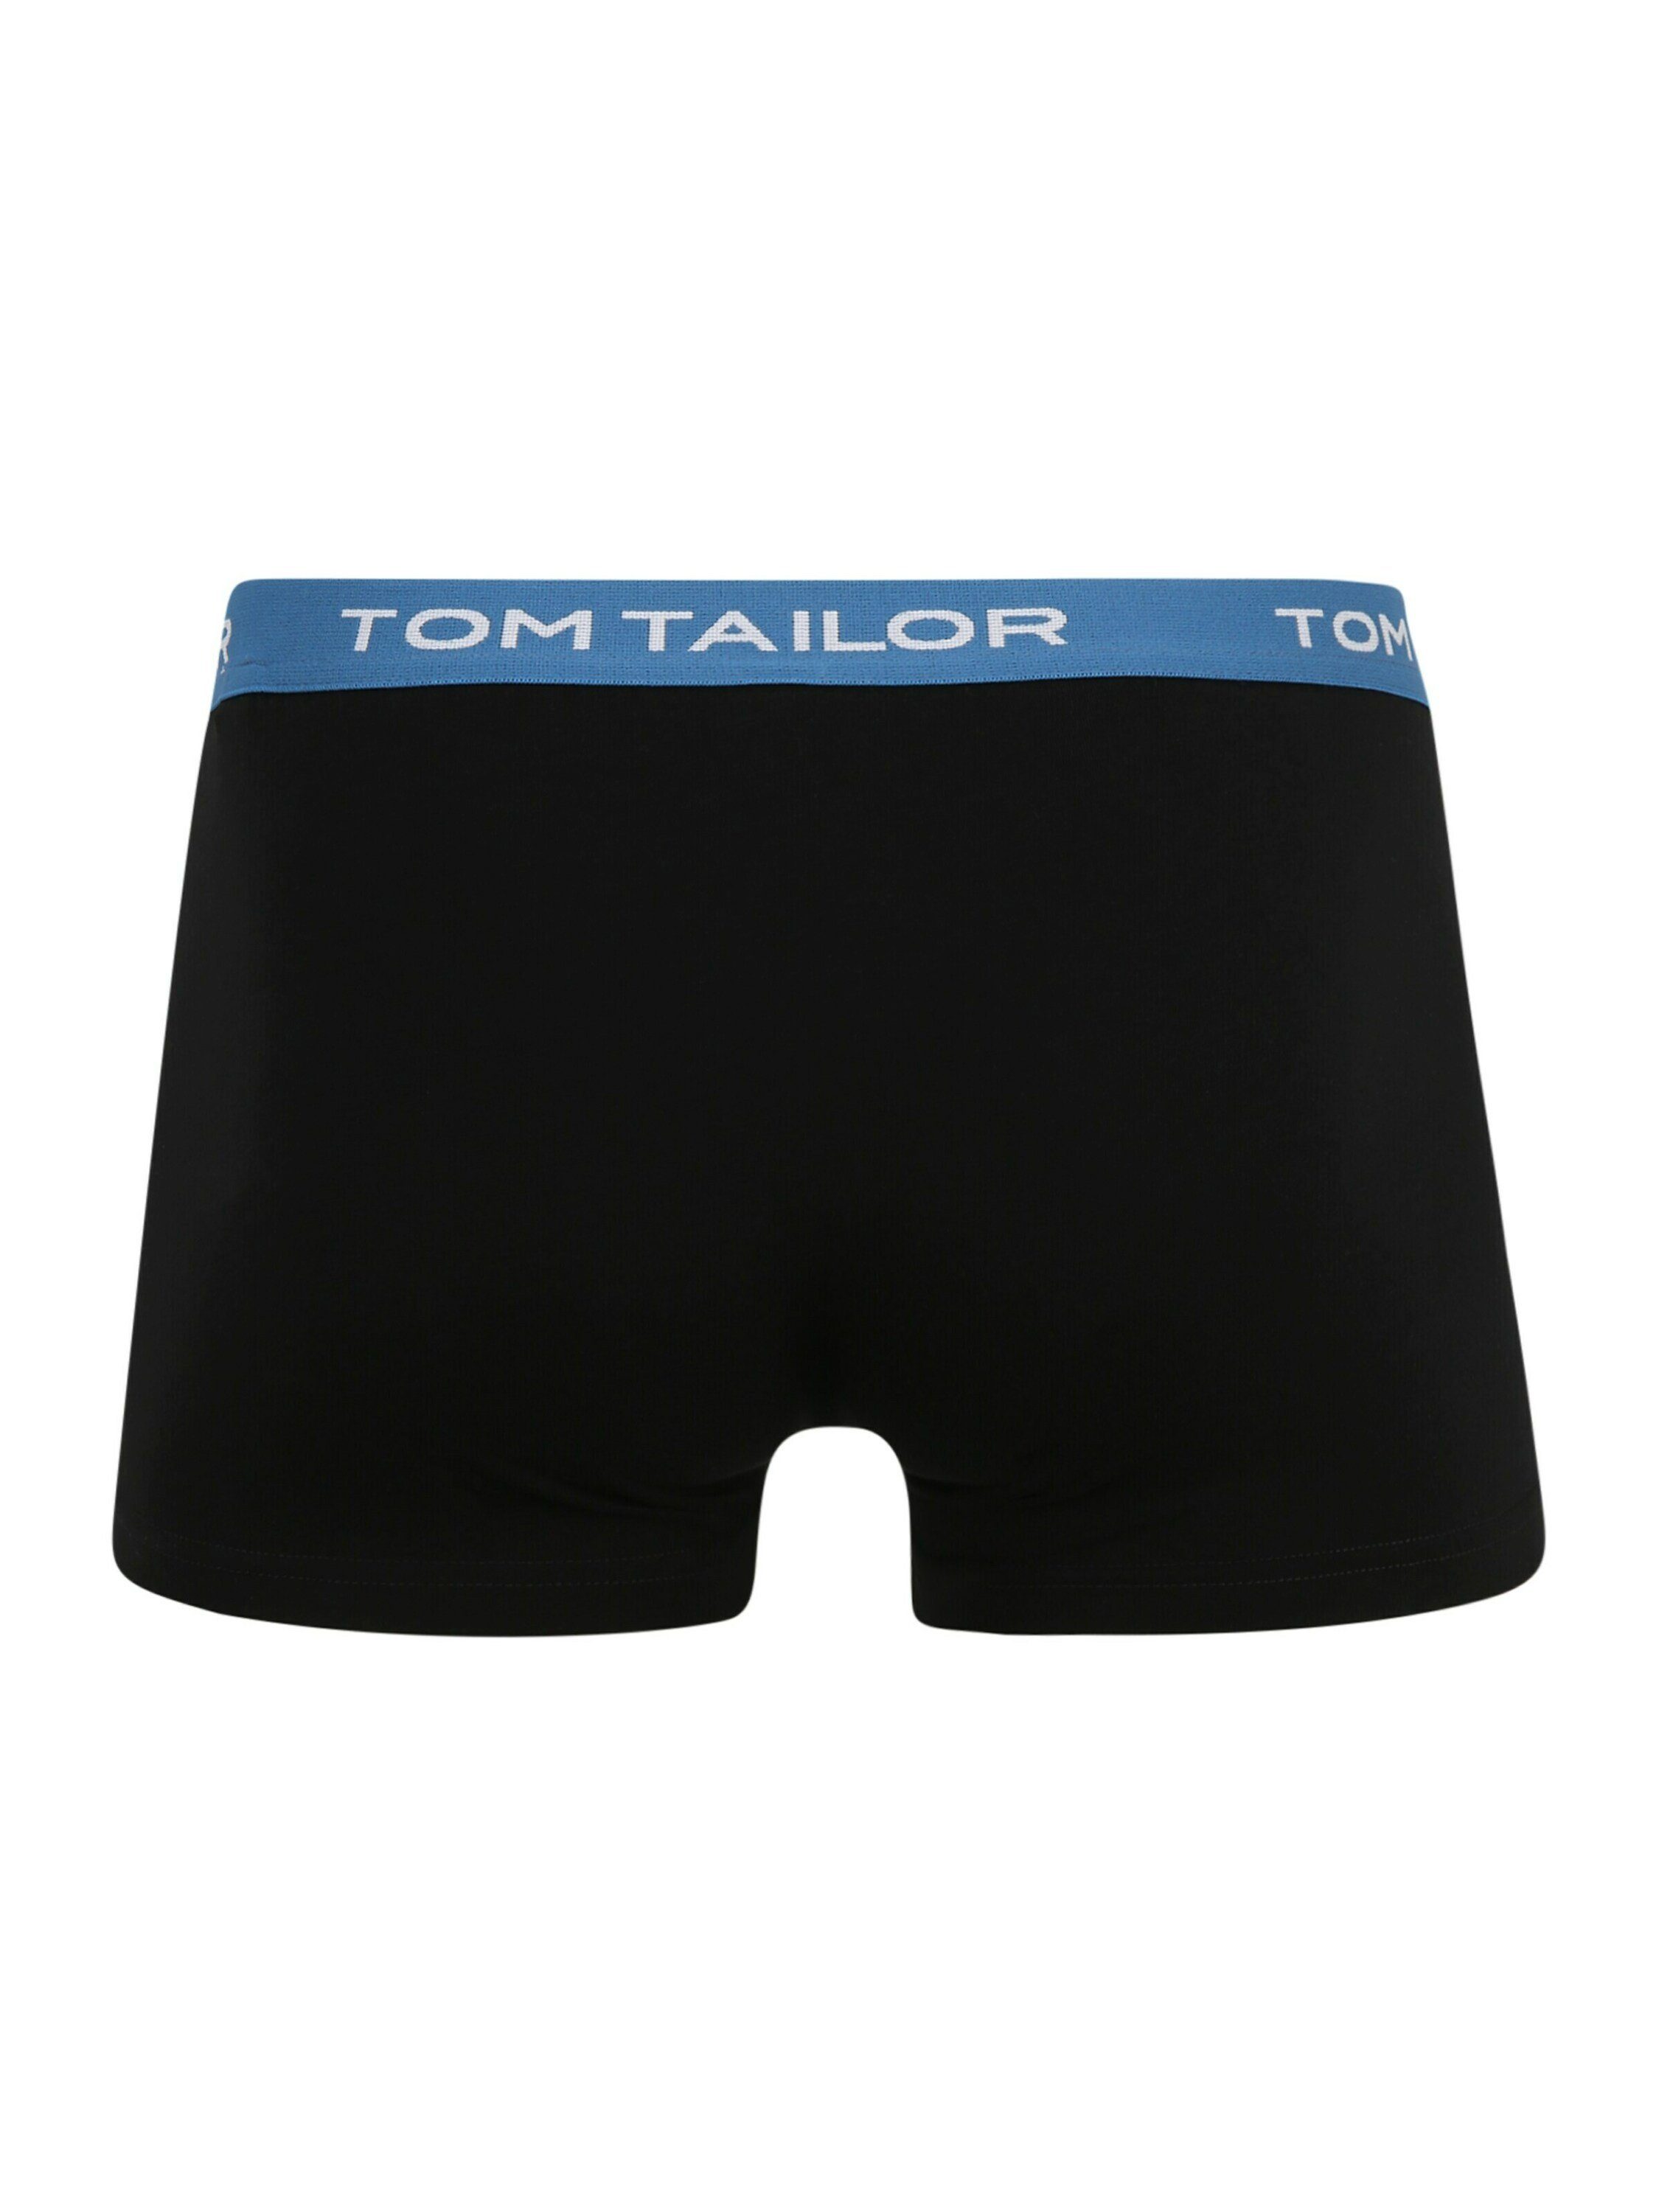 TAILOR Boxershorts (3-St) TOM schwarz-dunkel-uni